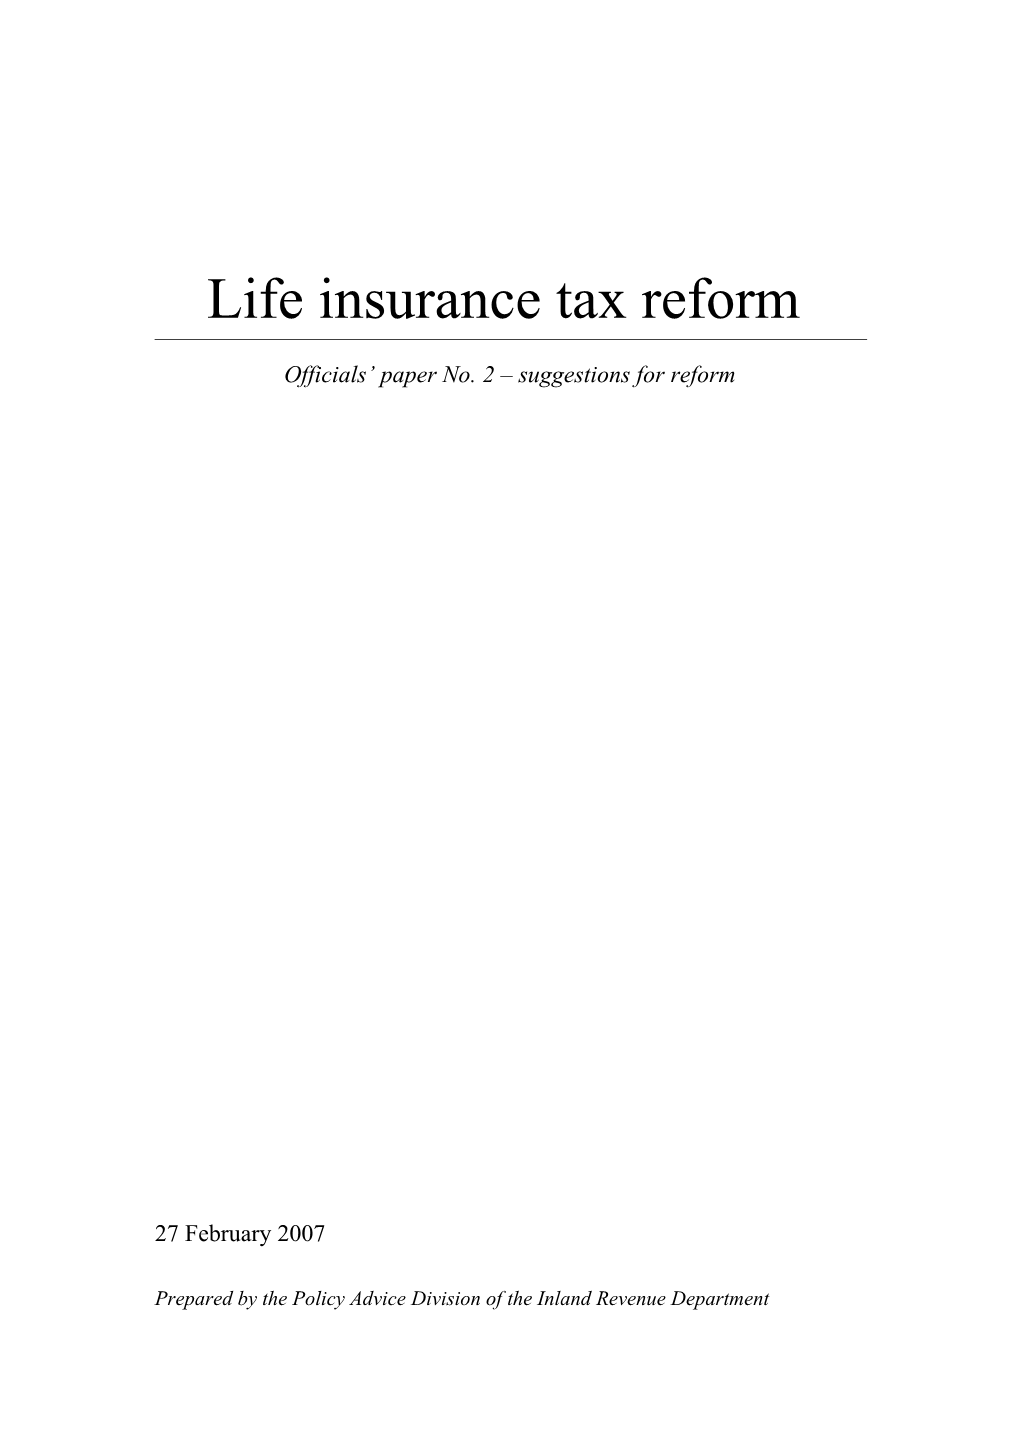 Life Insurance Tax Reform